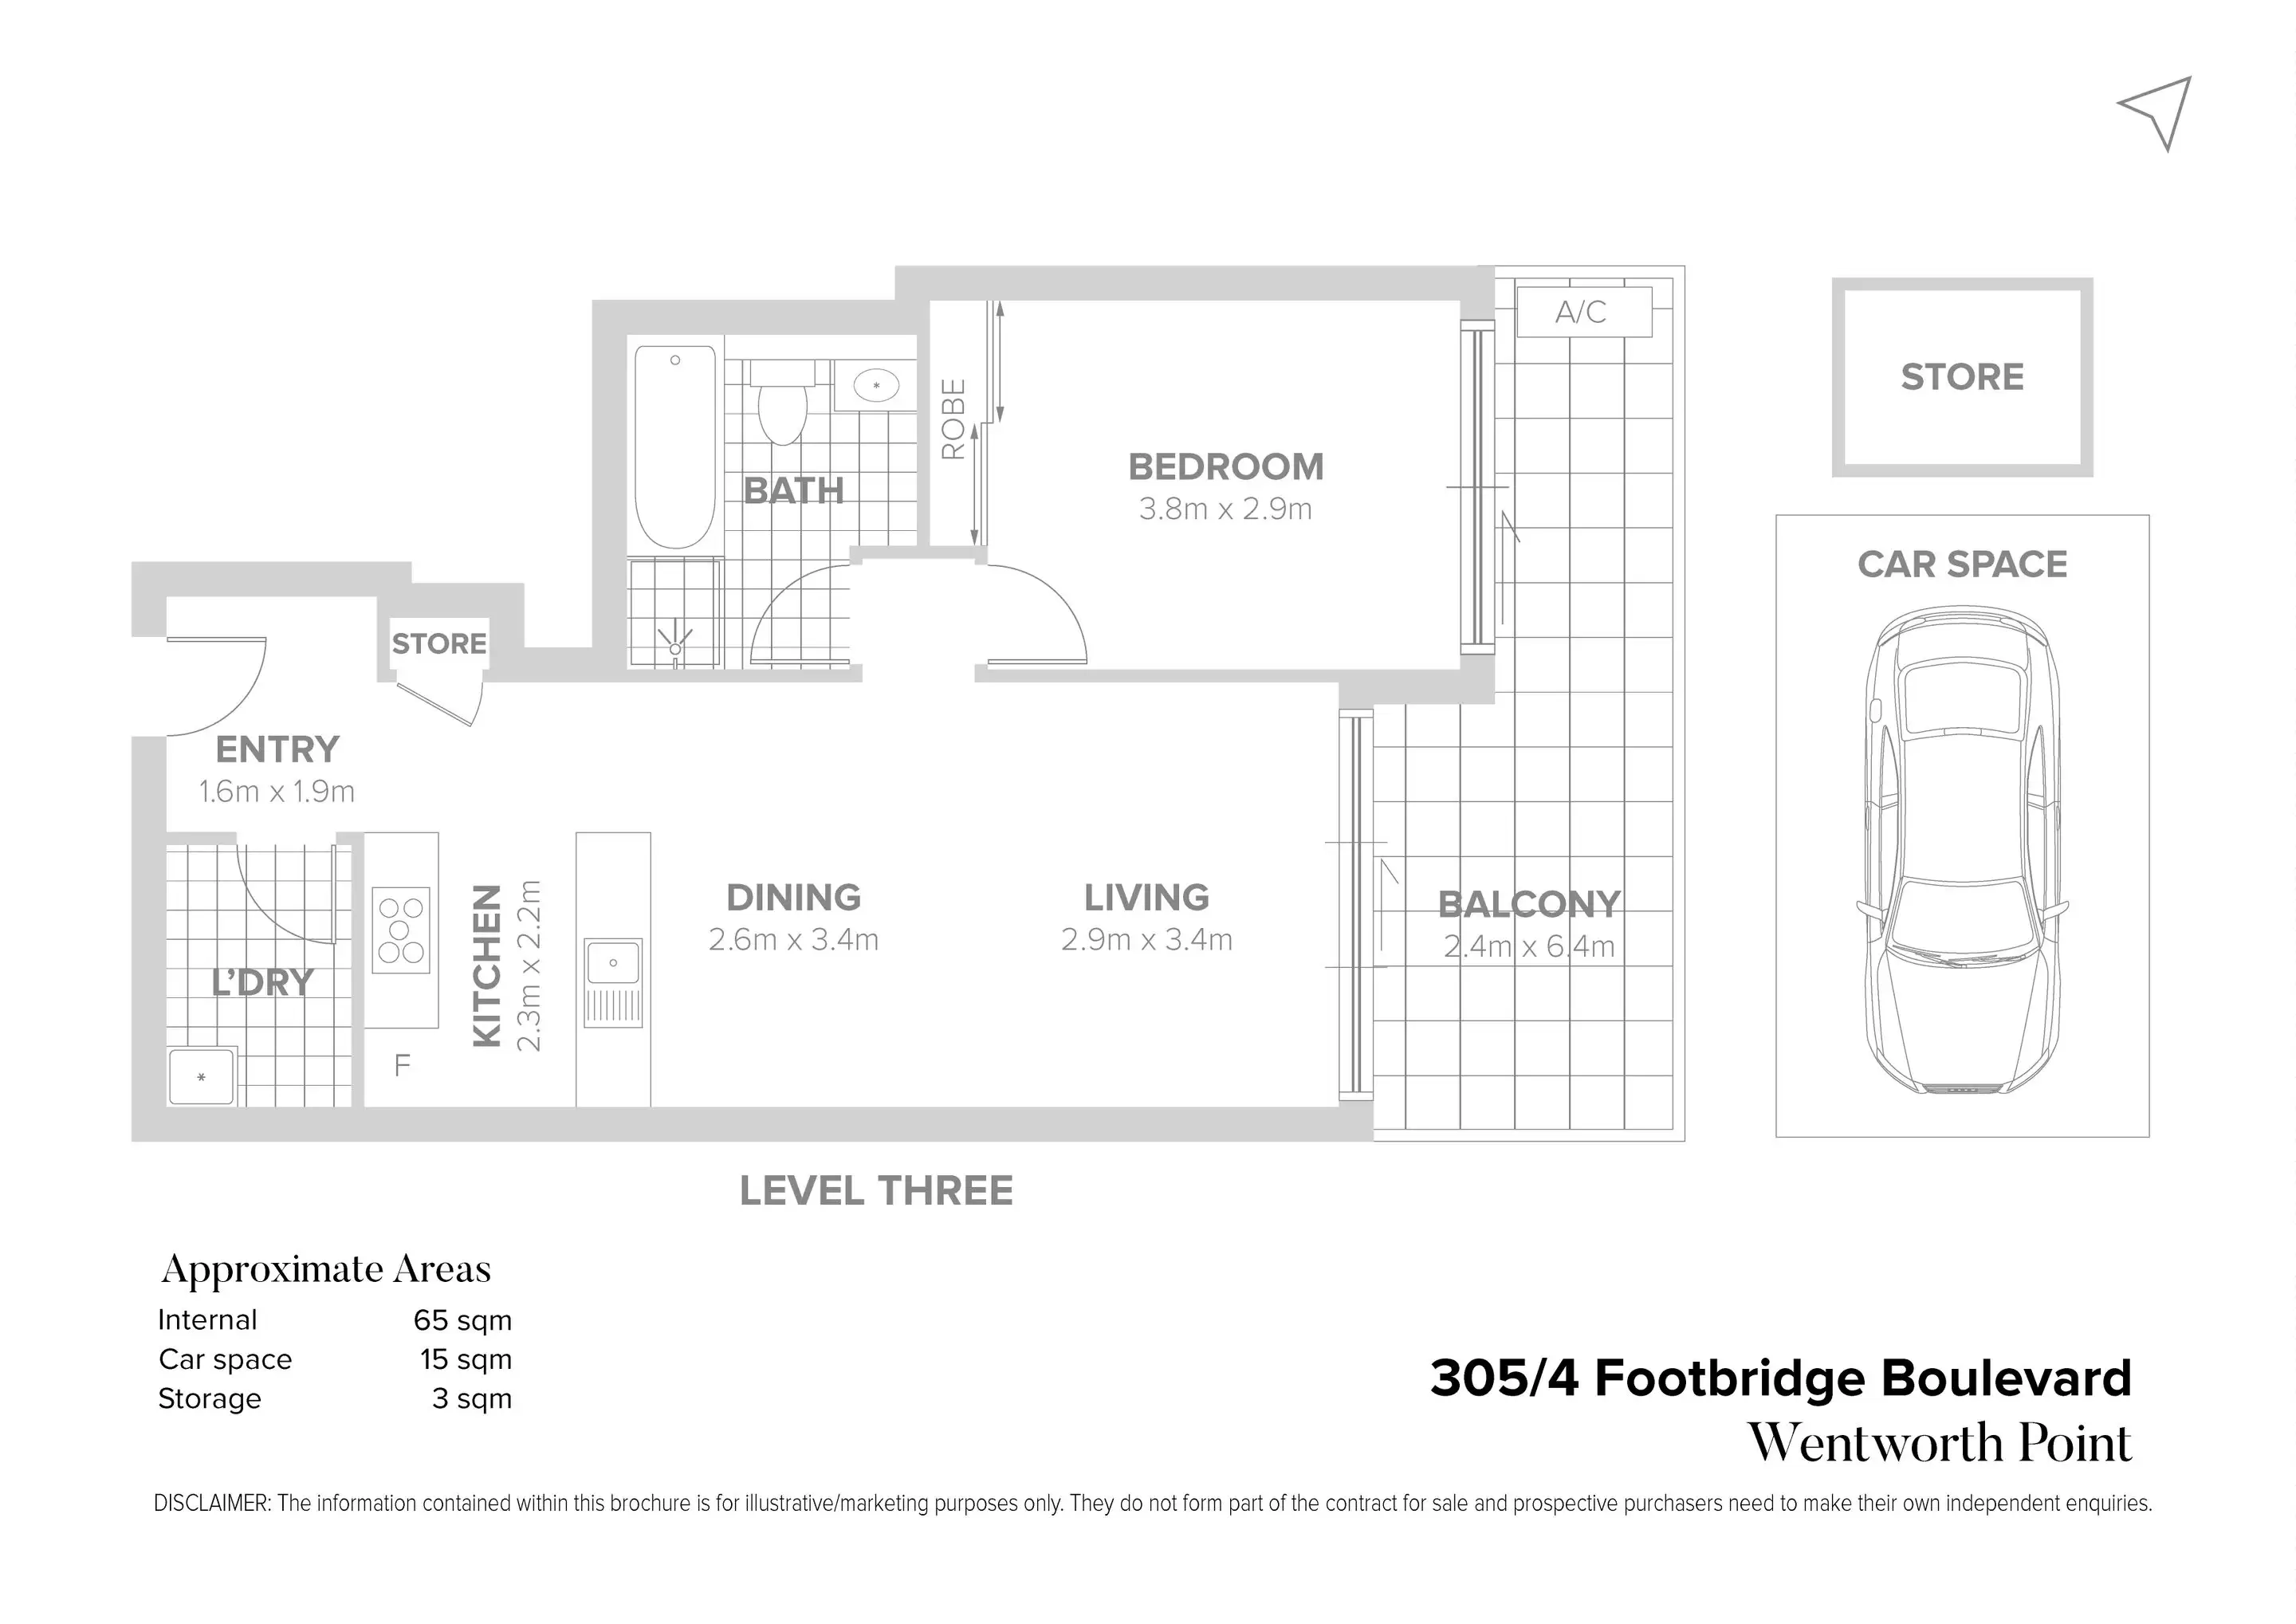 305/4 Footbridge Boulevard, Wentworth Point Sold by Chidiac Realty - floorplan